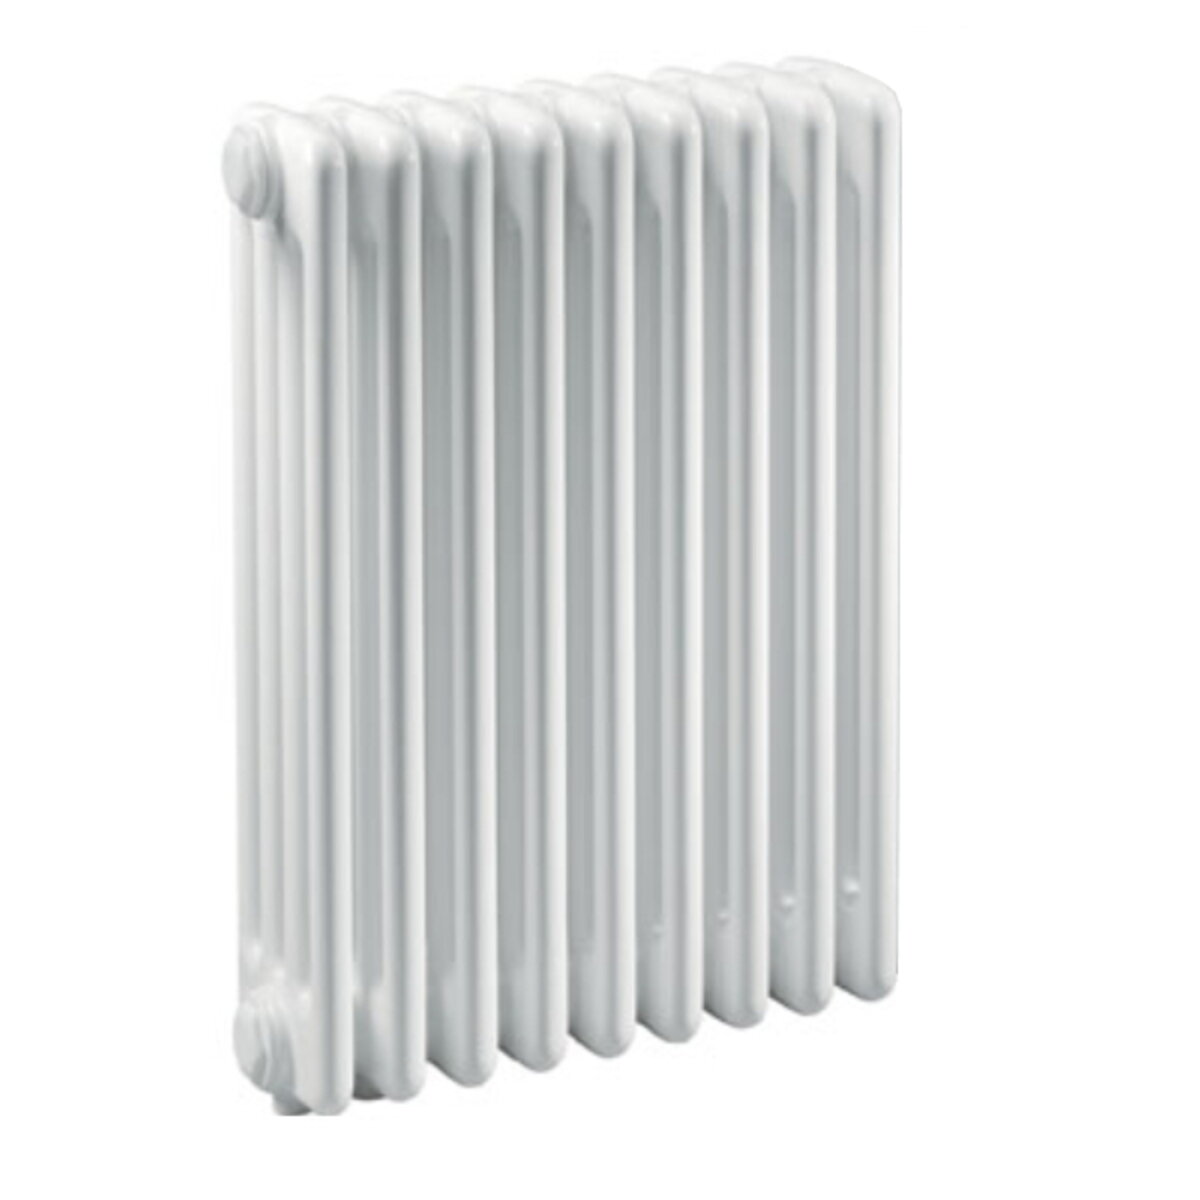 Ercos Comby steel column radiator 9 elements 3 columns center distance 1735 mm